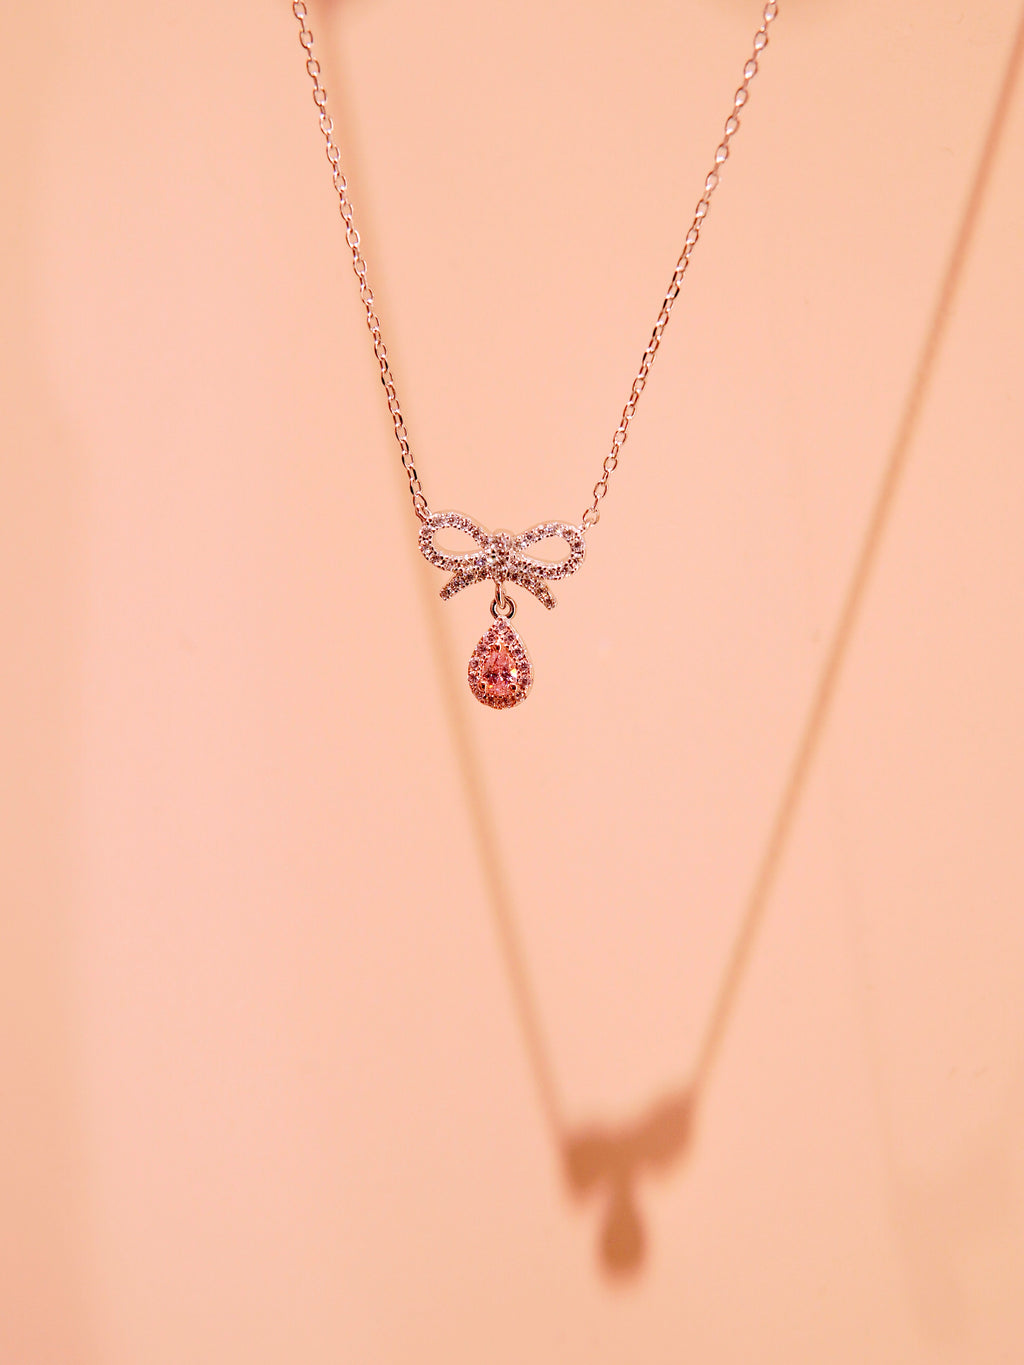 LAFIT· Royal Princess - Gift Set 皇族公主粉紅珠寶首飾套組